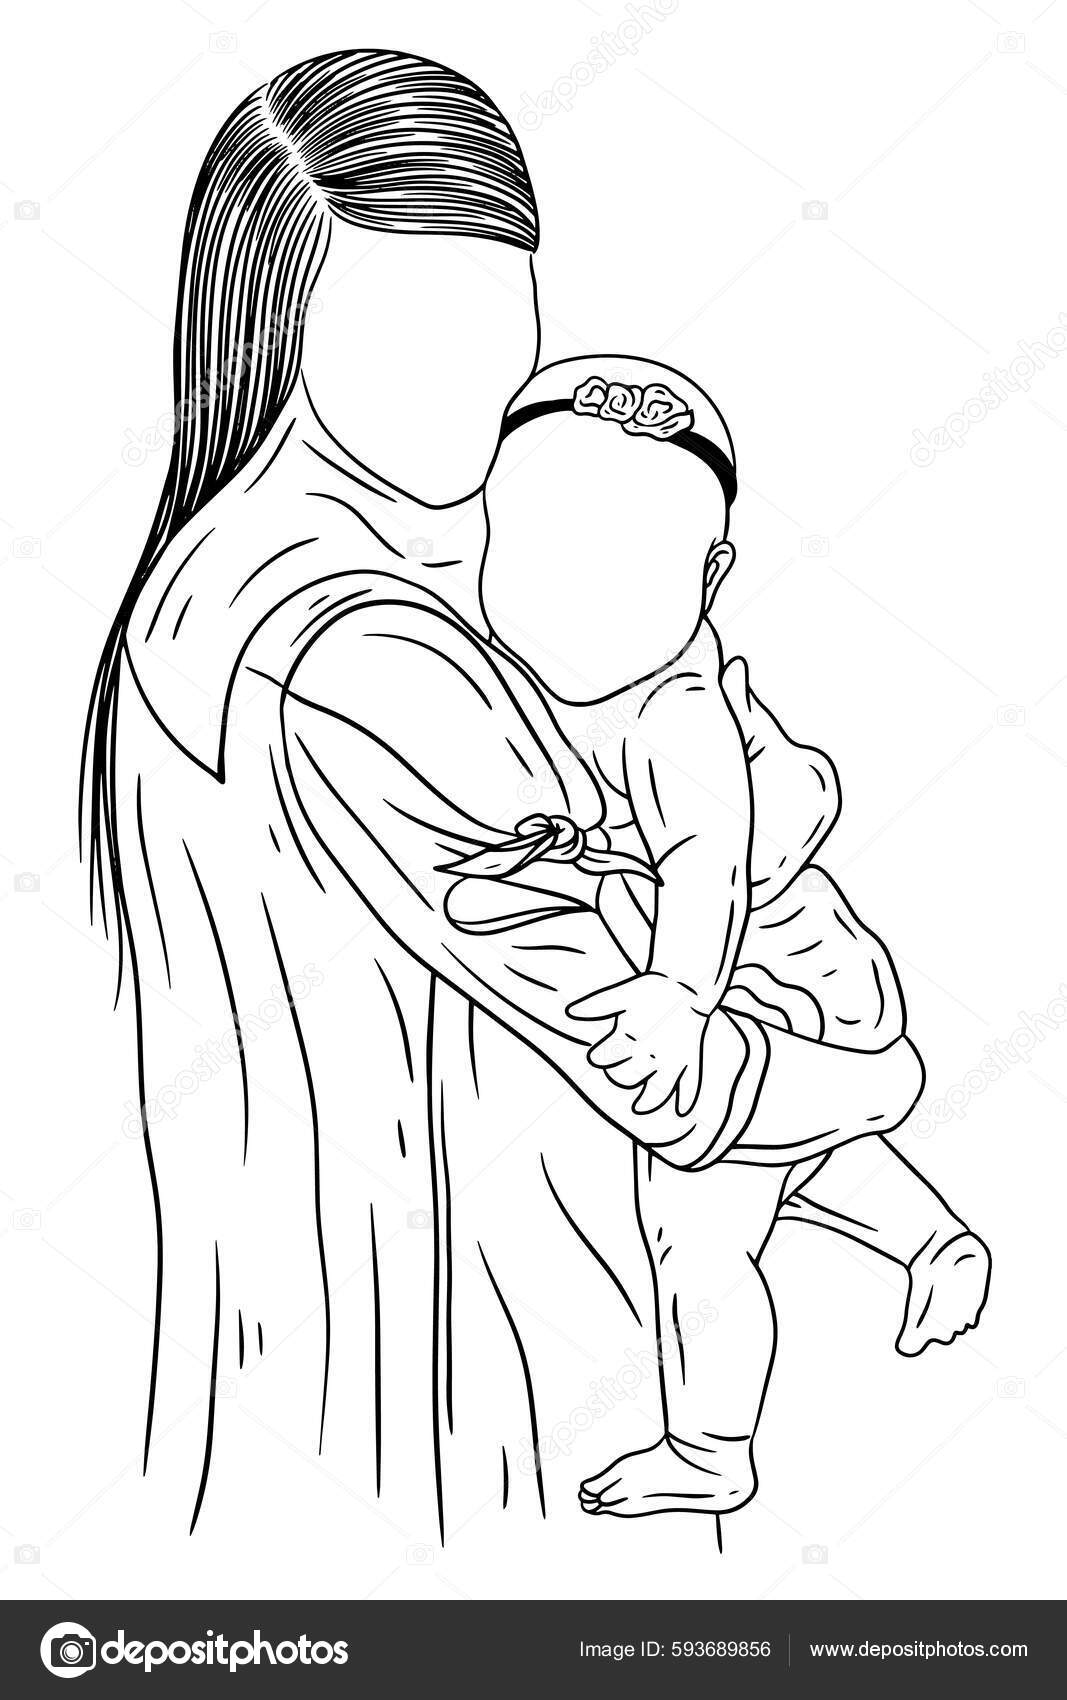 https://st.depositphotos.com/63675780/59368/v/1600/depositphotos_593689856-stock-illustration-happy-family-mother-baby-born.jpg